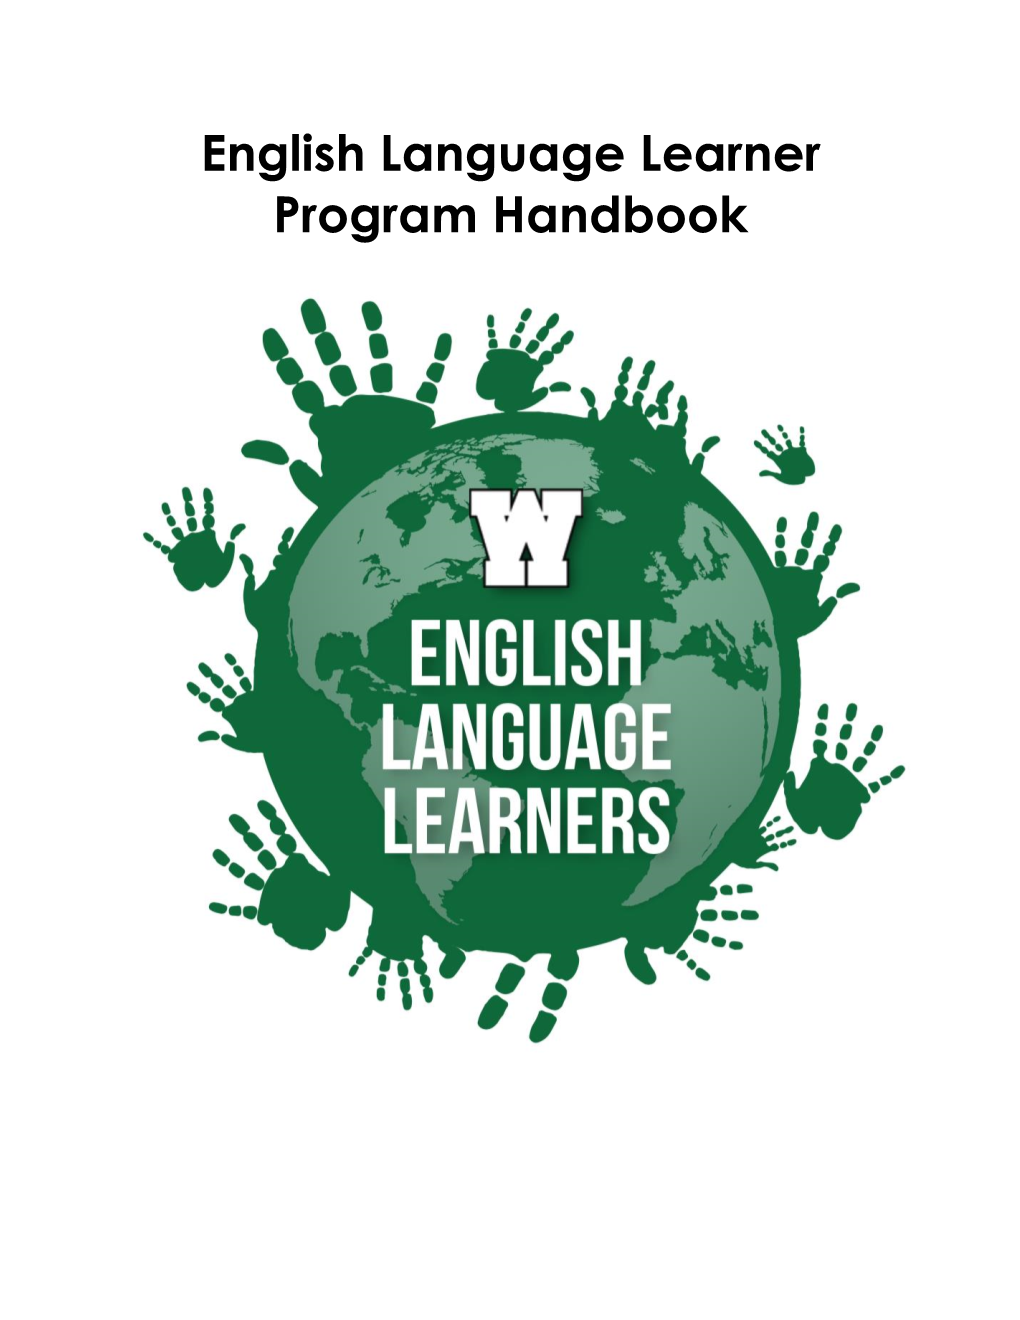 English As a Second Language Program Handbook (ESL)